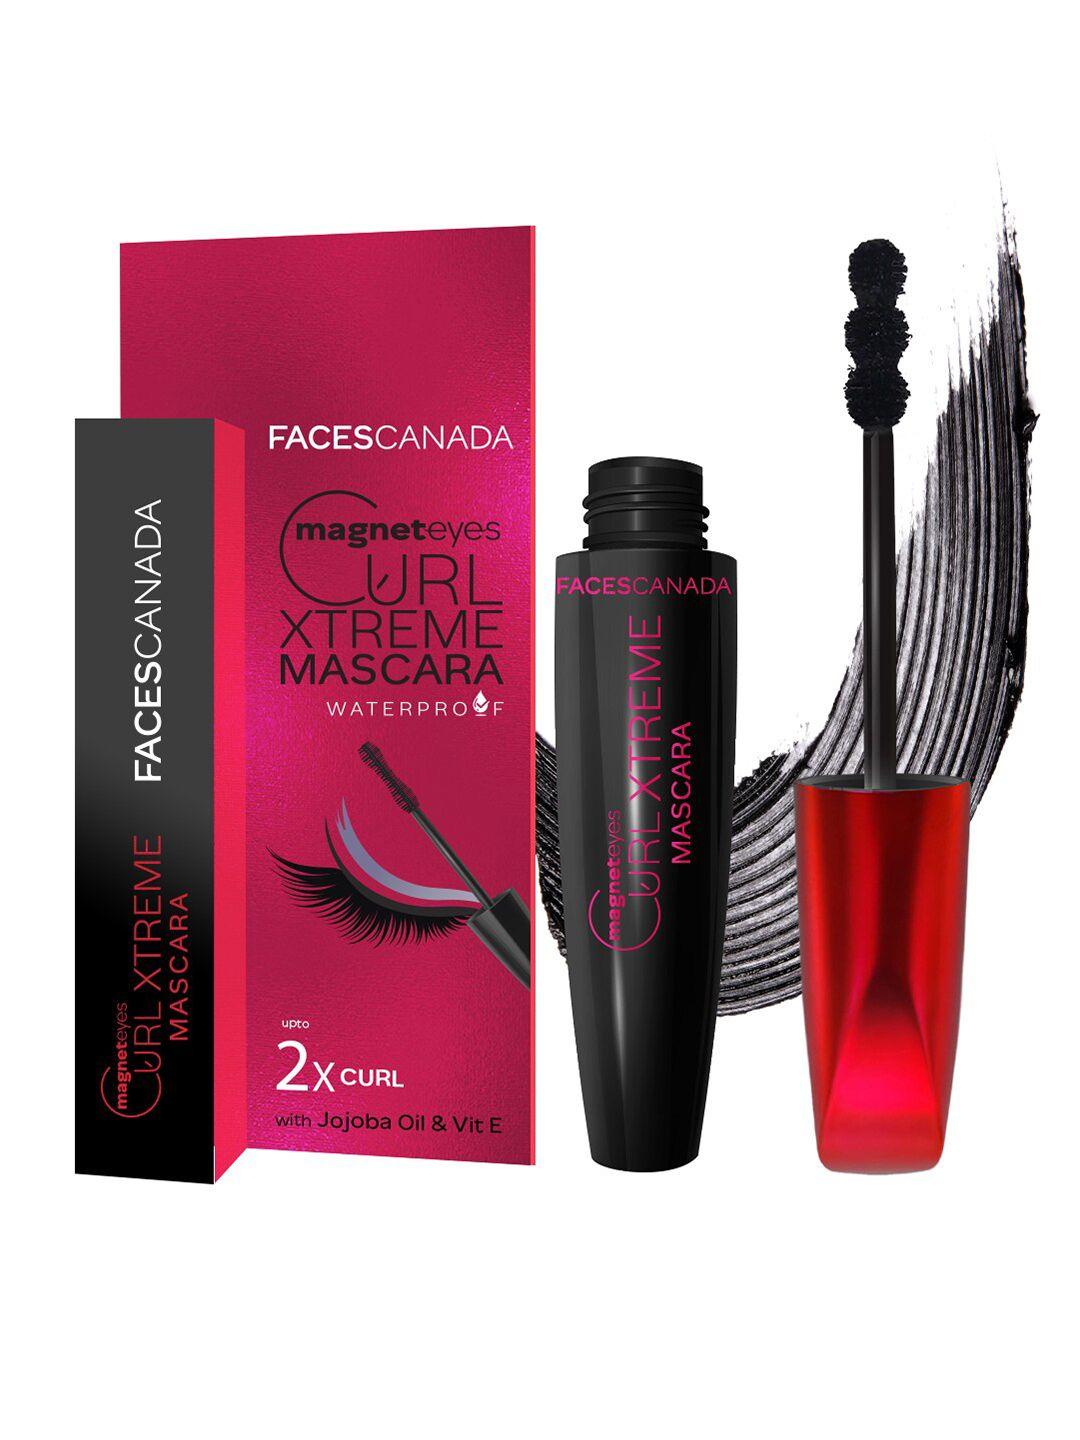 FACES CANADA Magneteyes Curl Xtreme Waterproof Mascara with Jojoba Oil 8 g - Black